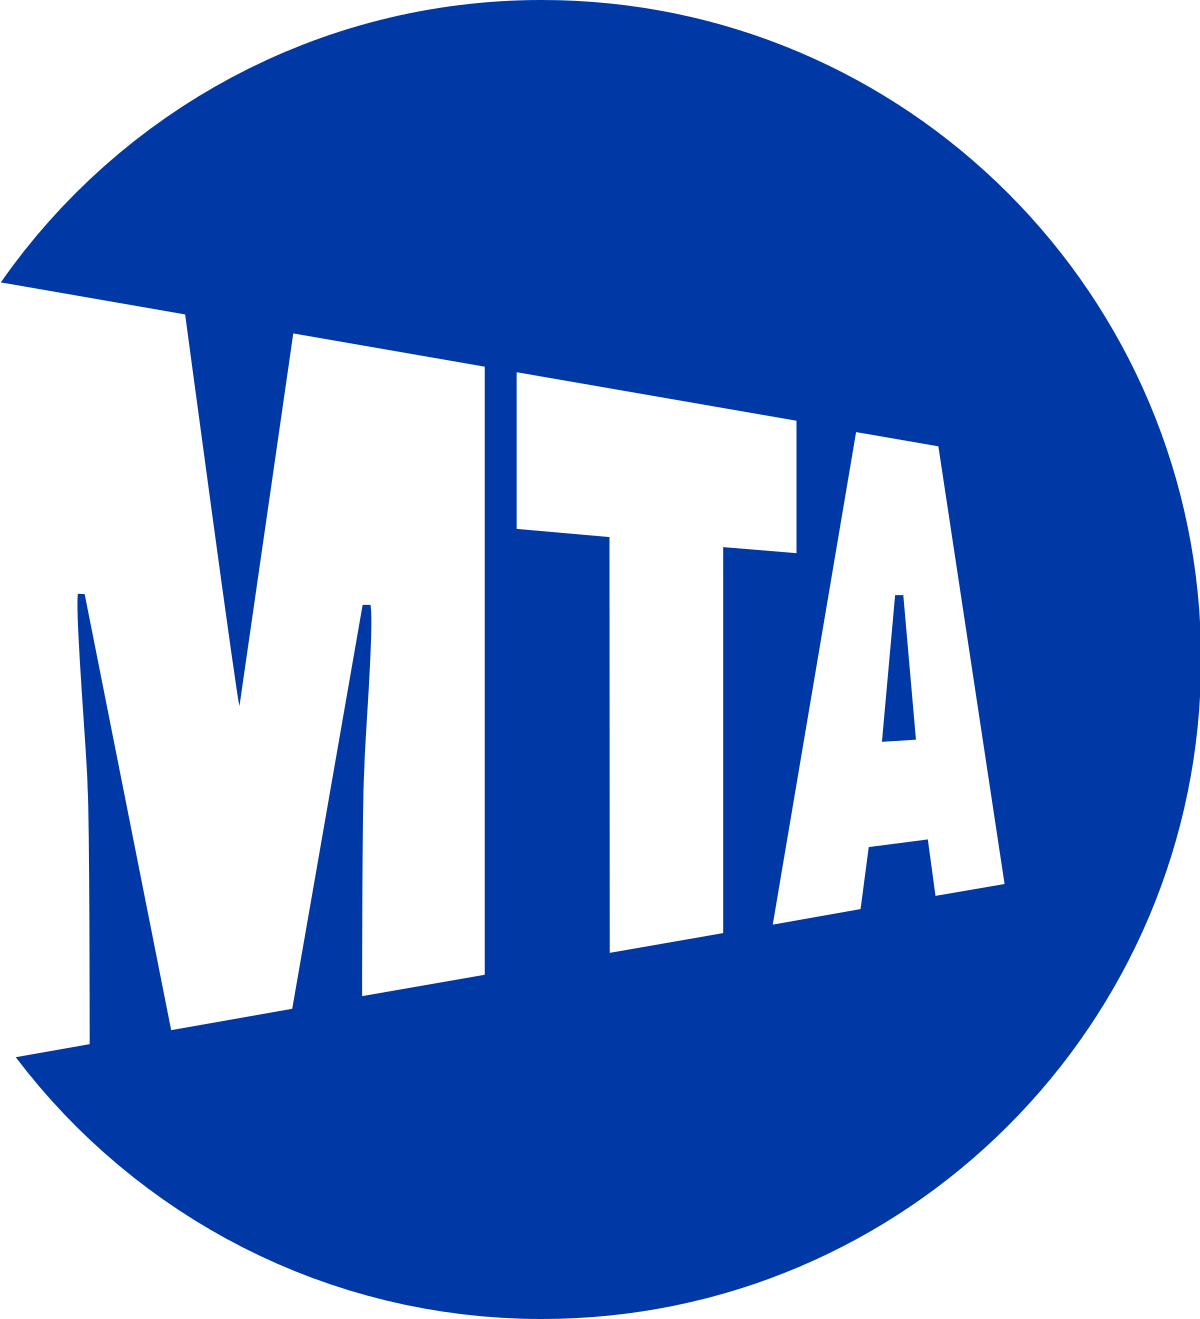 MTA: No West-of-Hudson Fare Increase